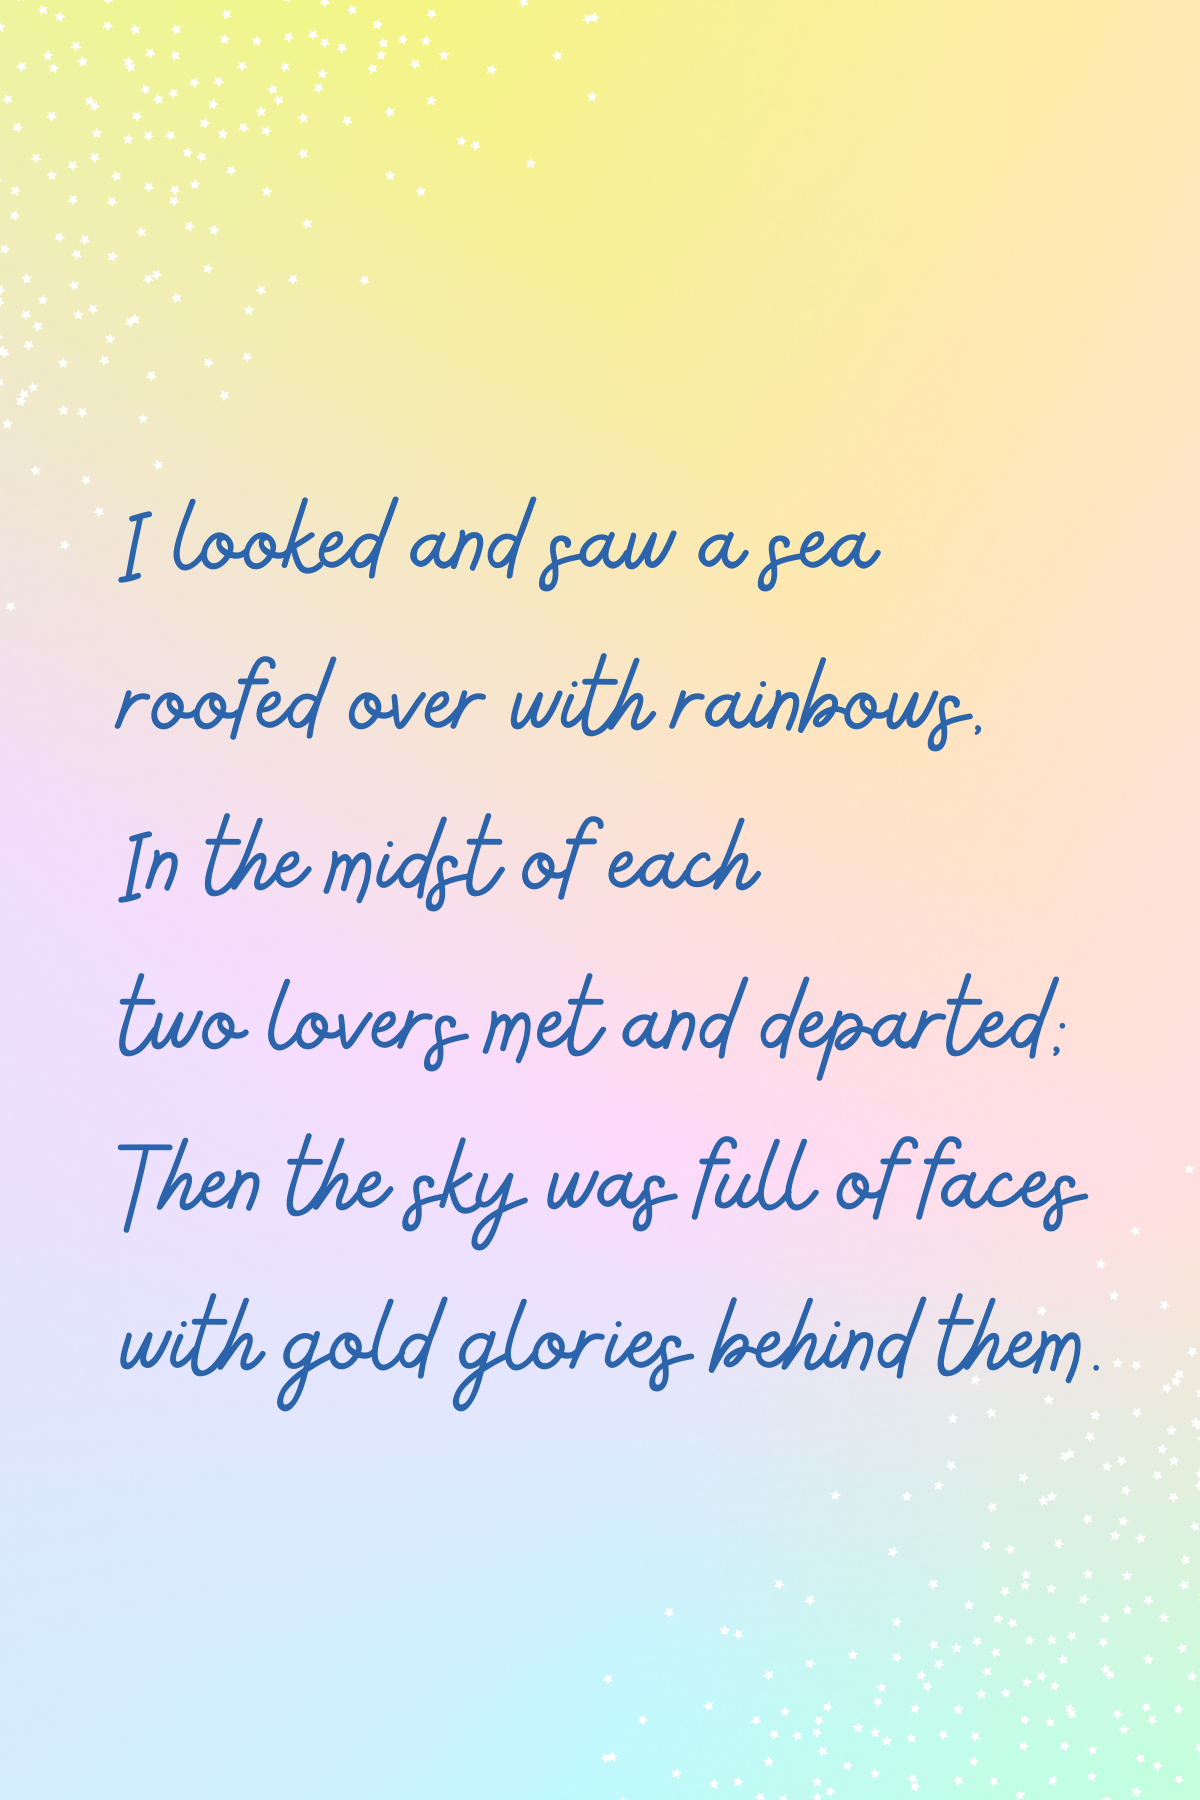 ezra pound rainbow poem